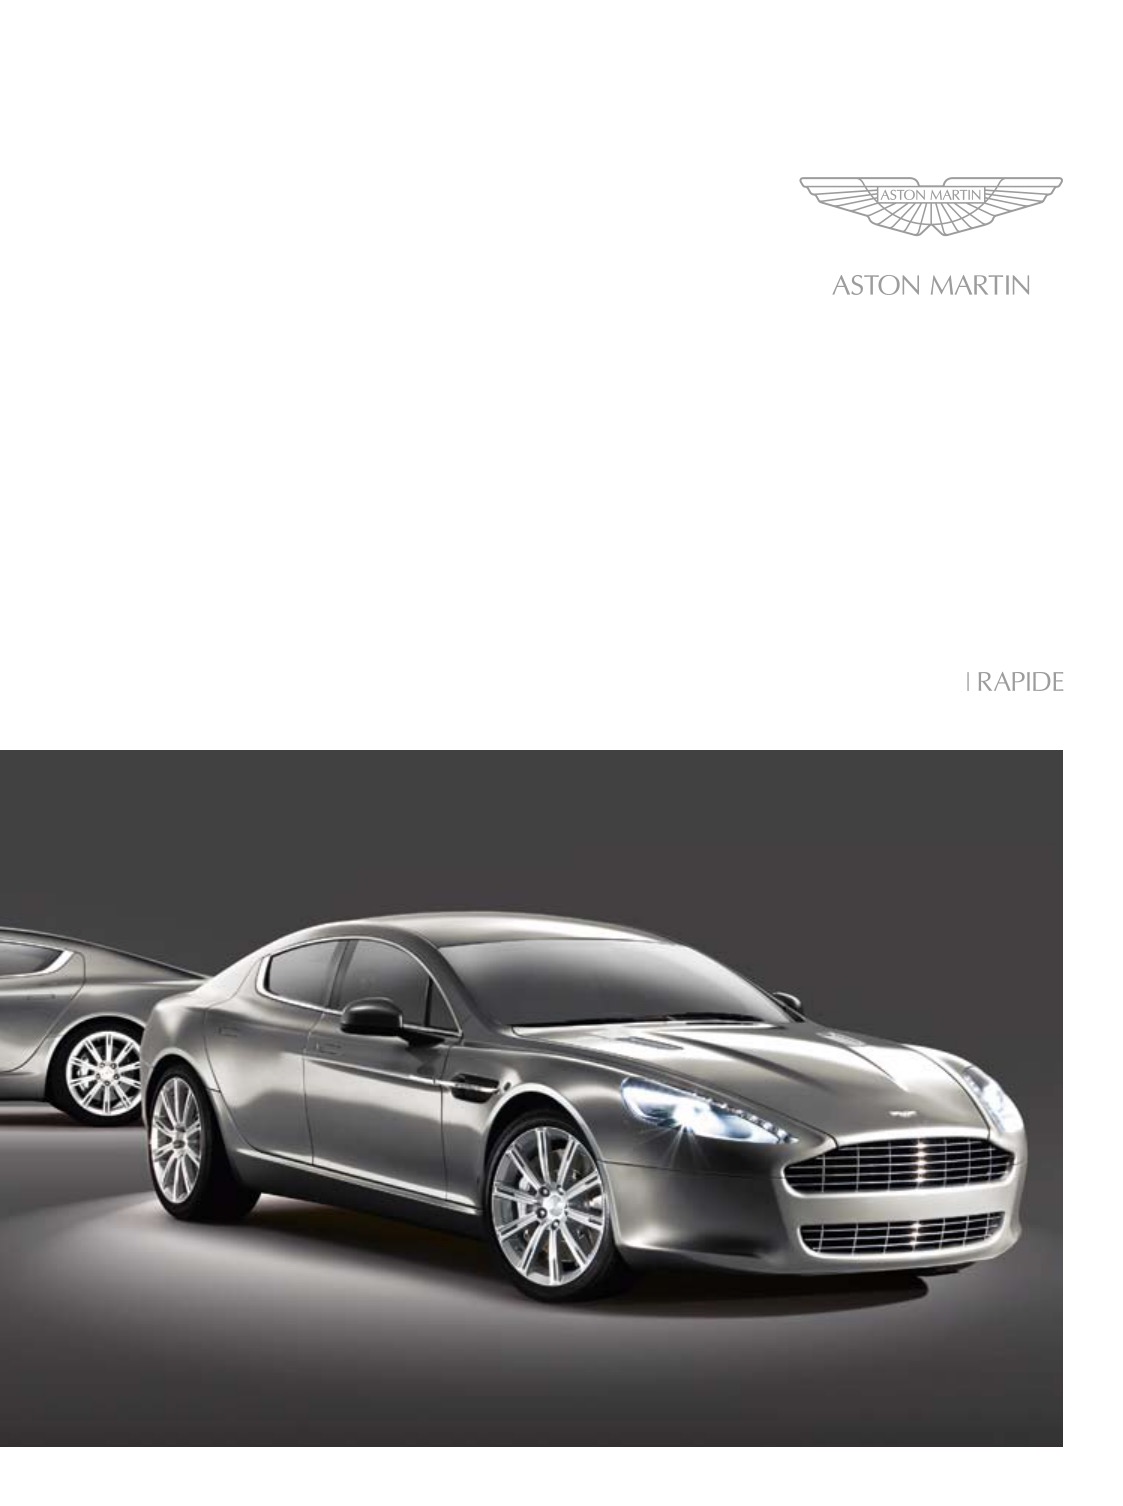 2011 Aston Martin Rapide Brochure